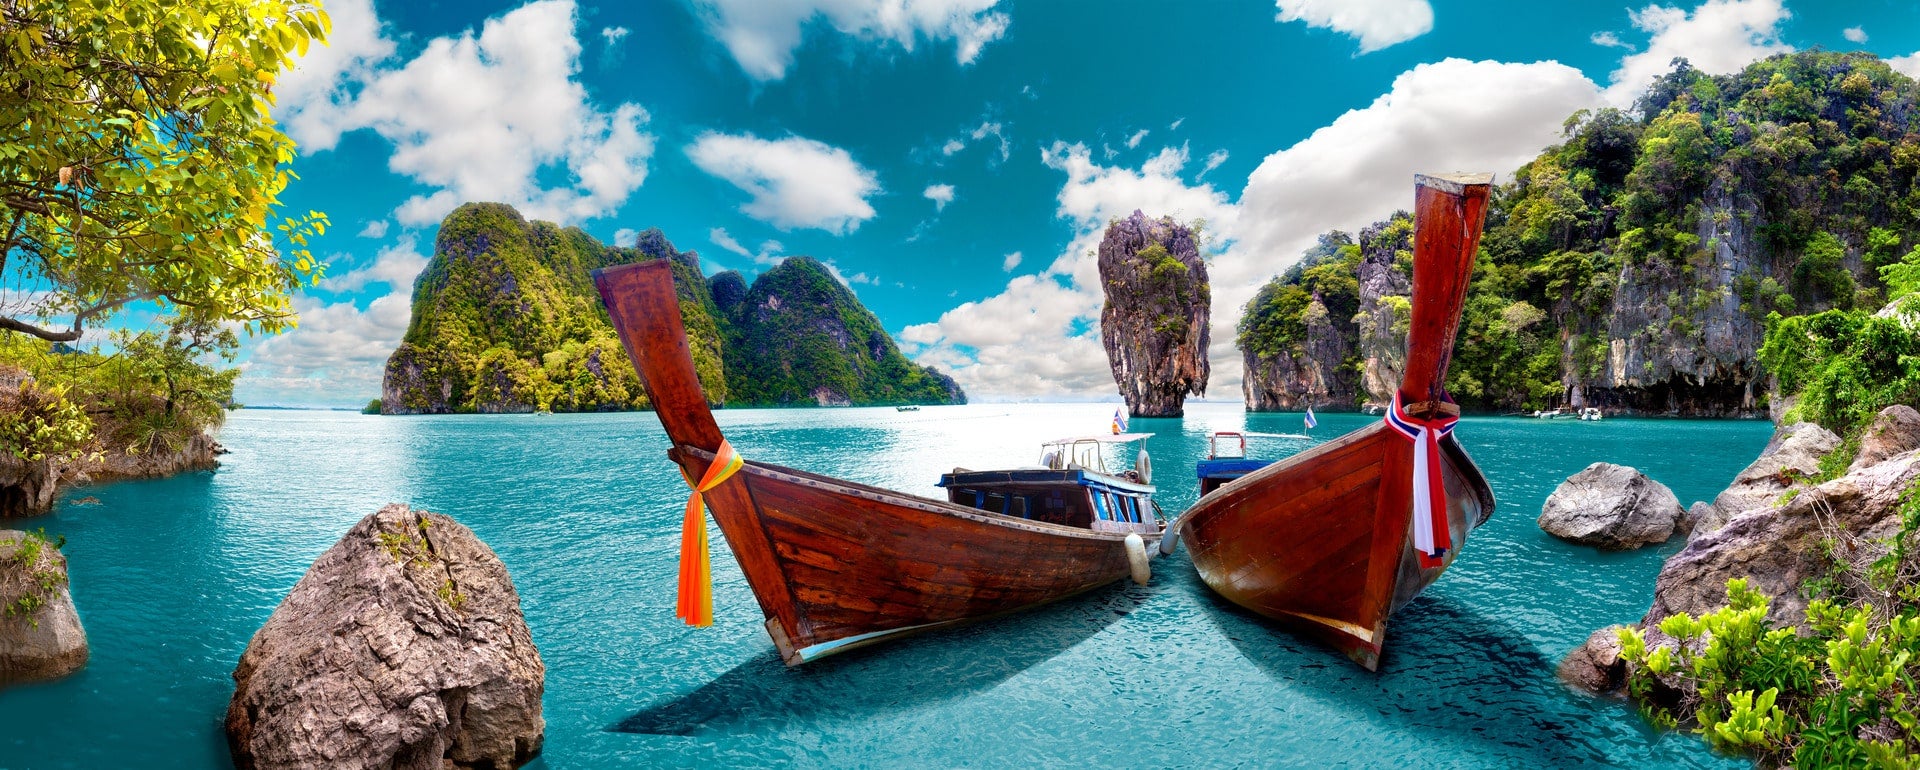 Thailand boat